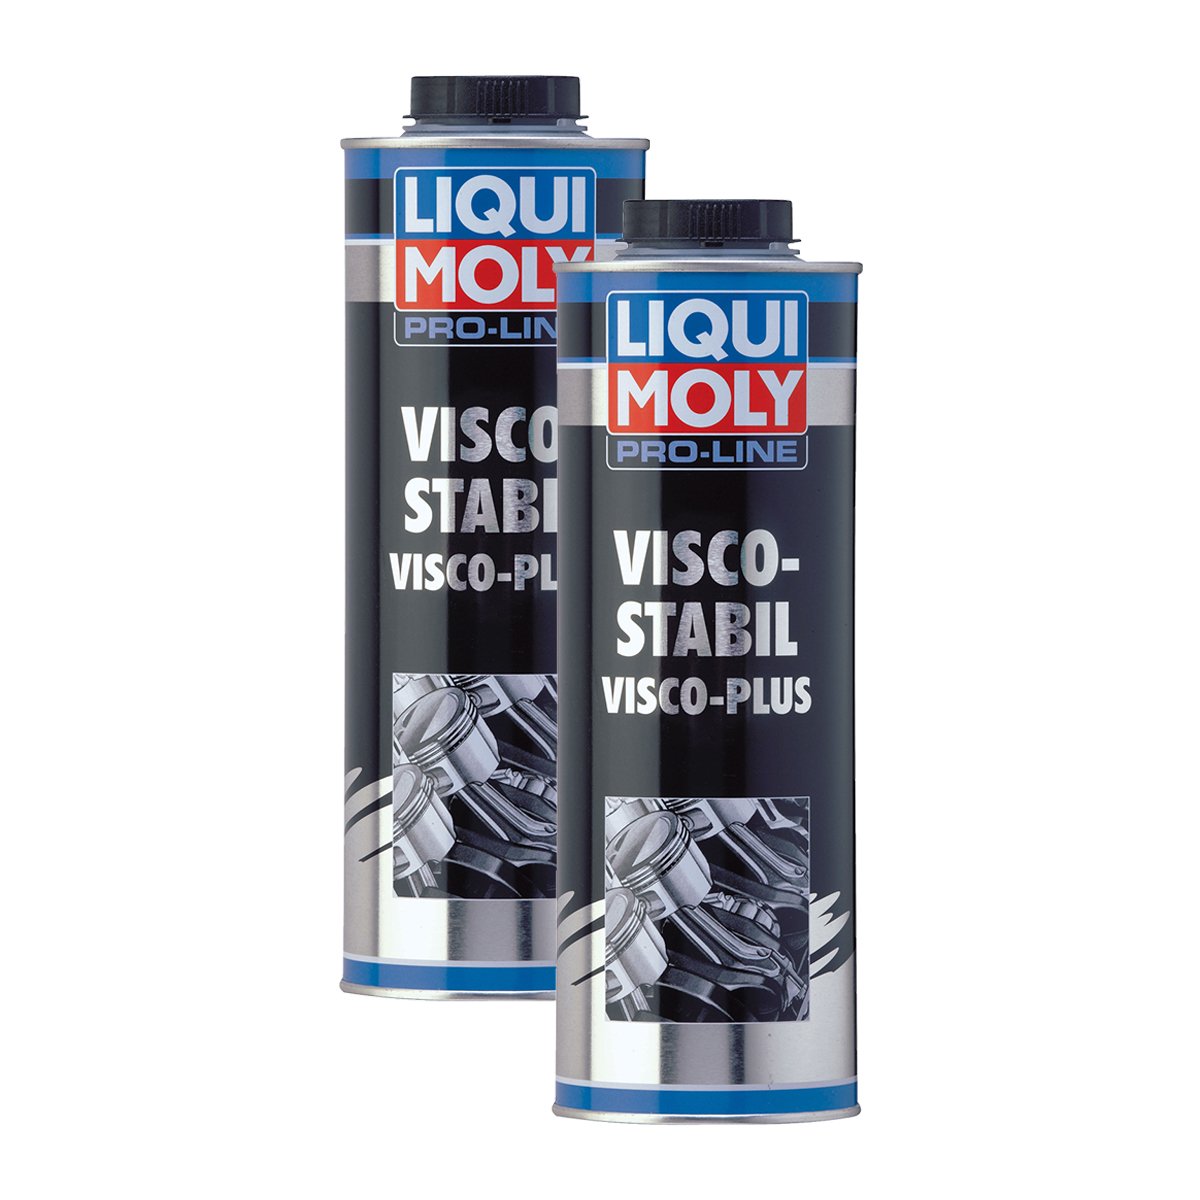 2x LIQUI MOLY 5196 Pro Line Visco Stabil Motoröladditiv 1L von LIQUI-MOLY_bundle